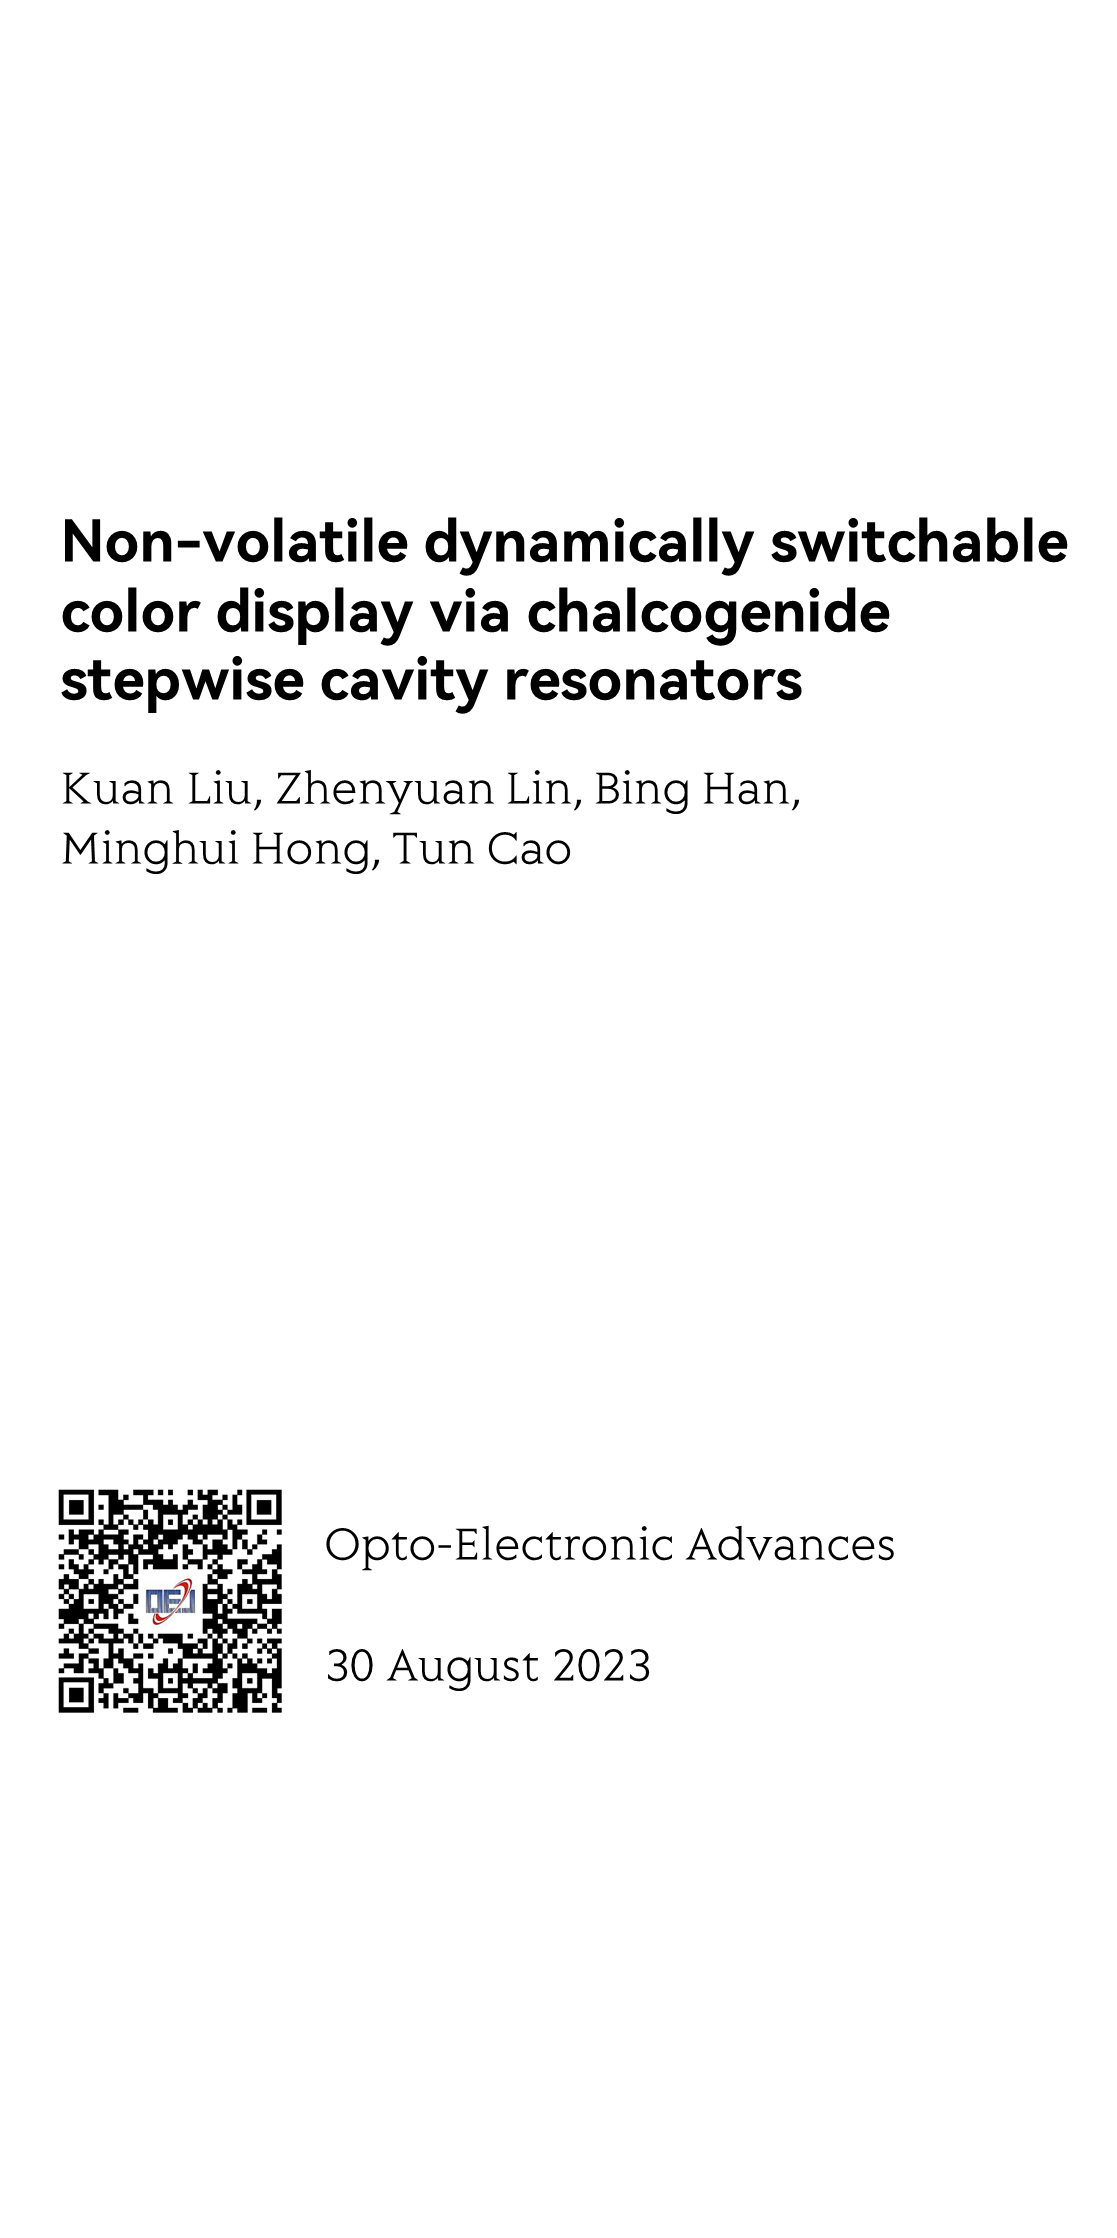 Non-volatile dynamically switchable color display via chalcogenide stepwise cavity resonators_1